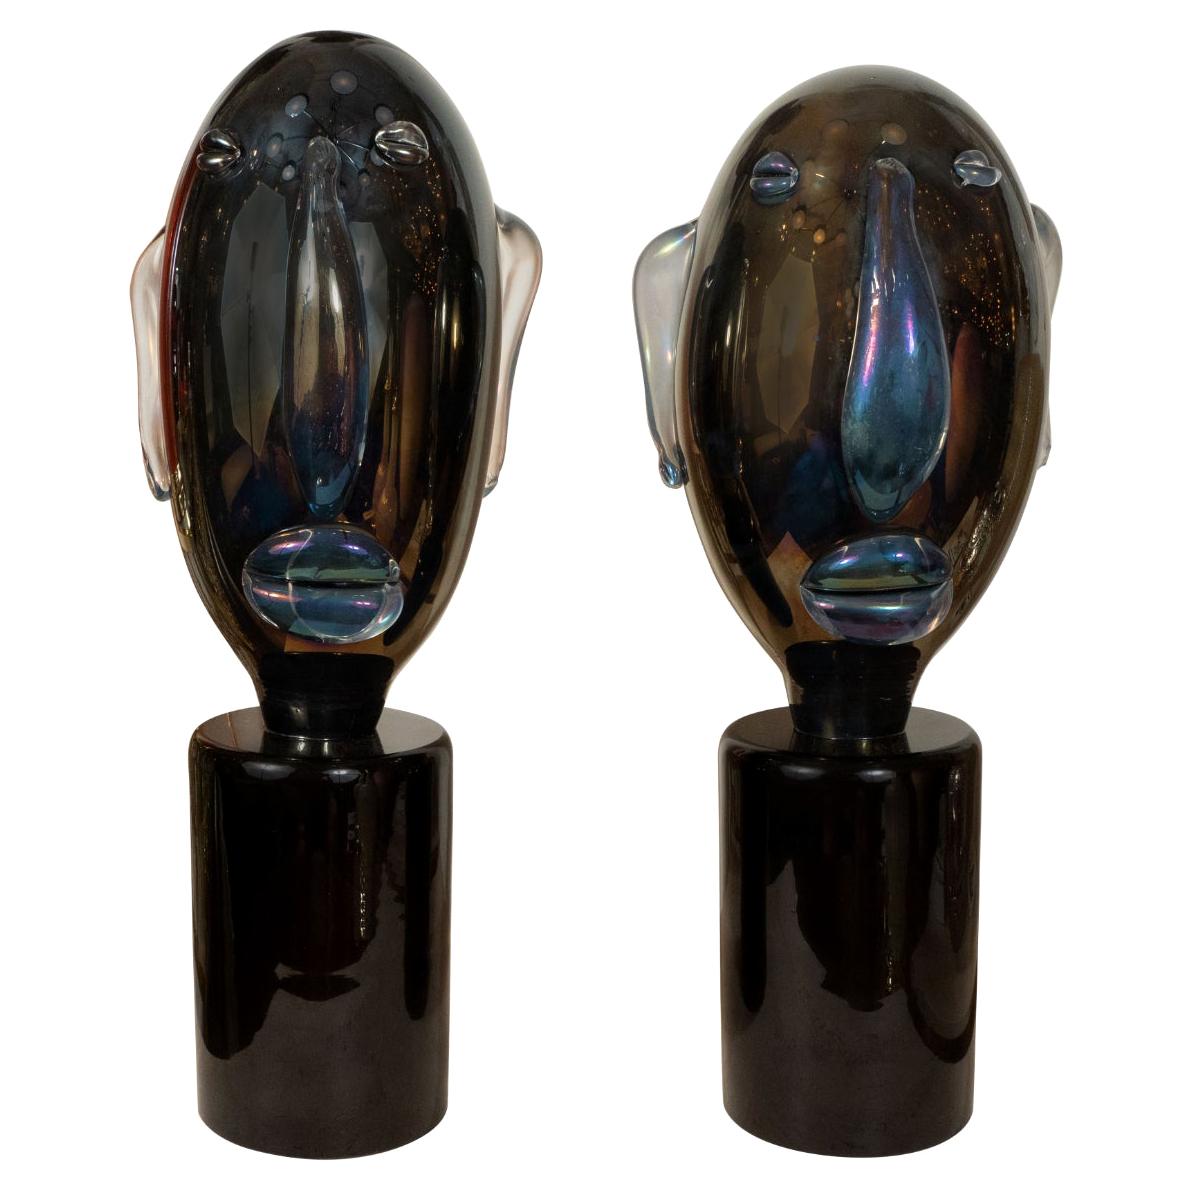 Pair of Smoky Glass Head Sculptures